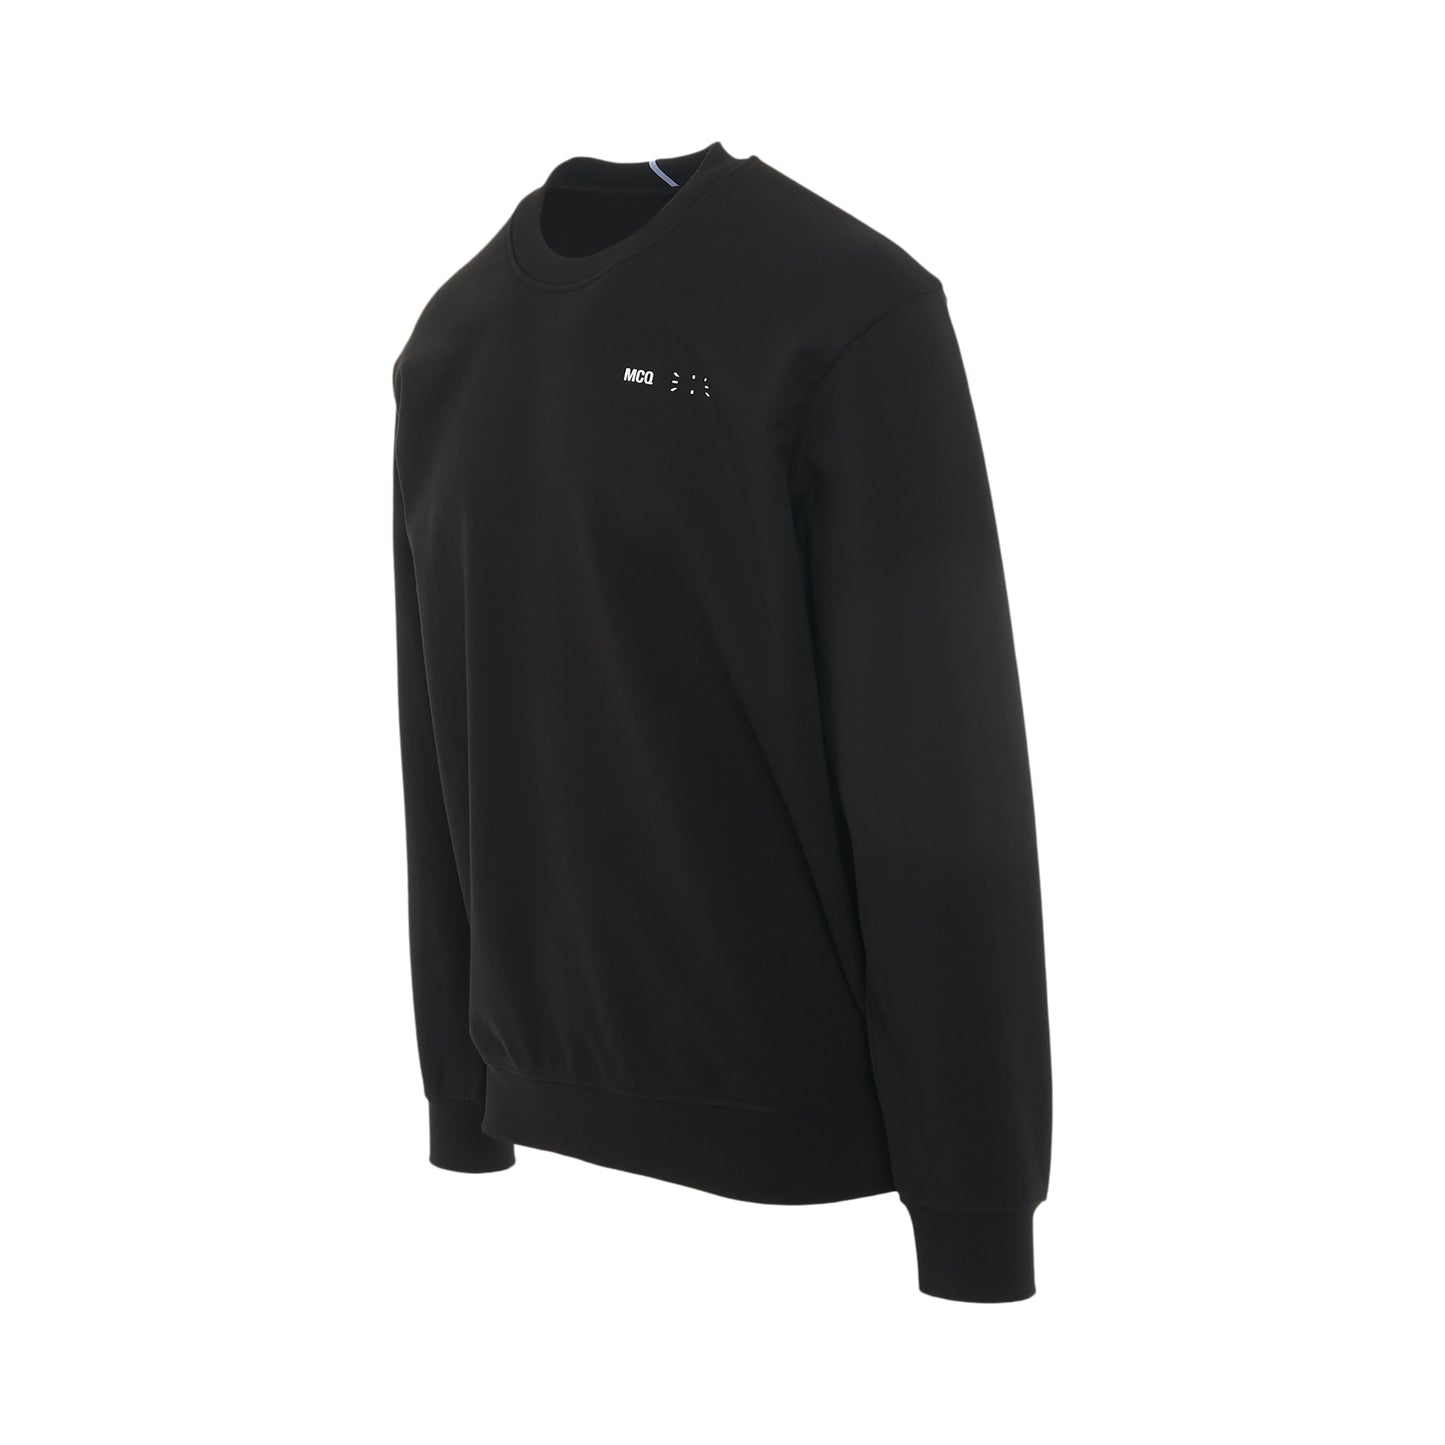 IC0 Embroidered Logo Sweatshirt in Black